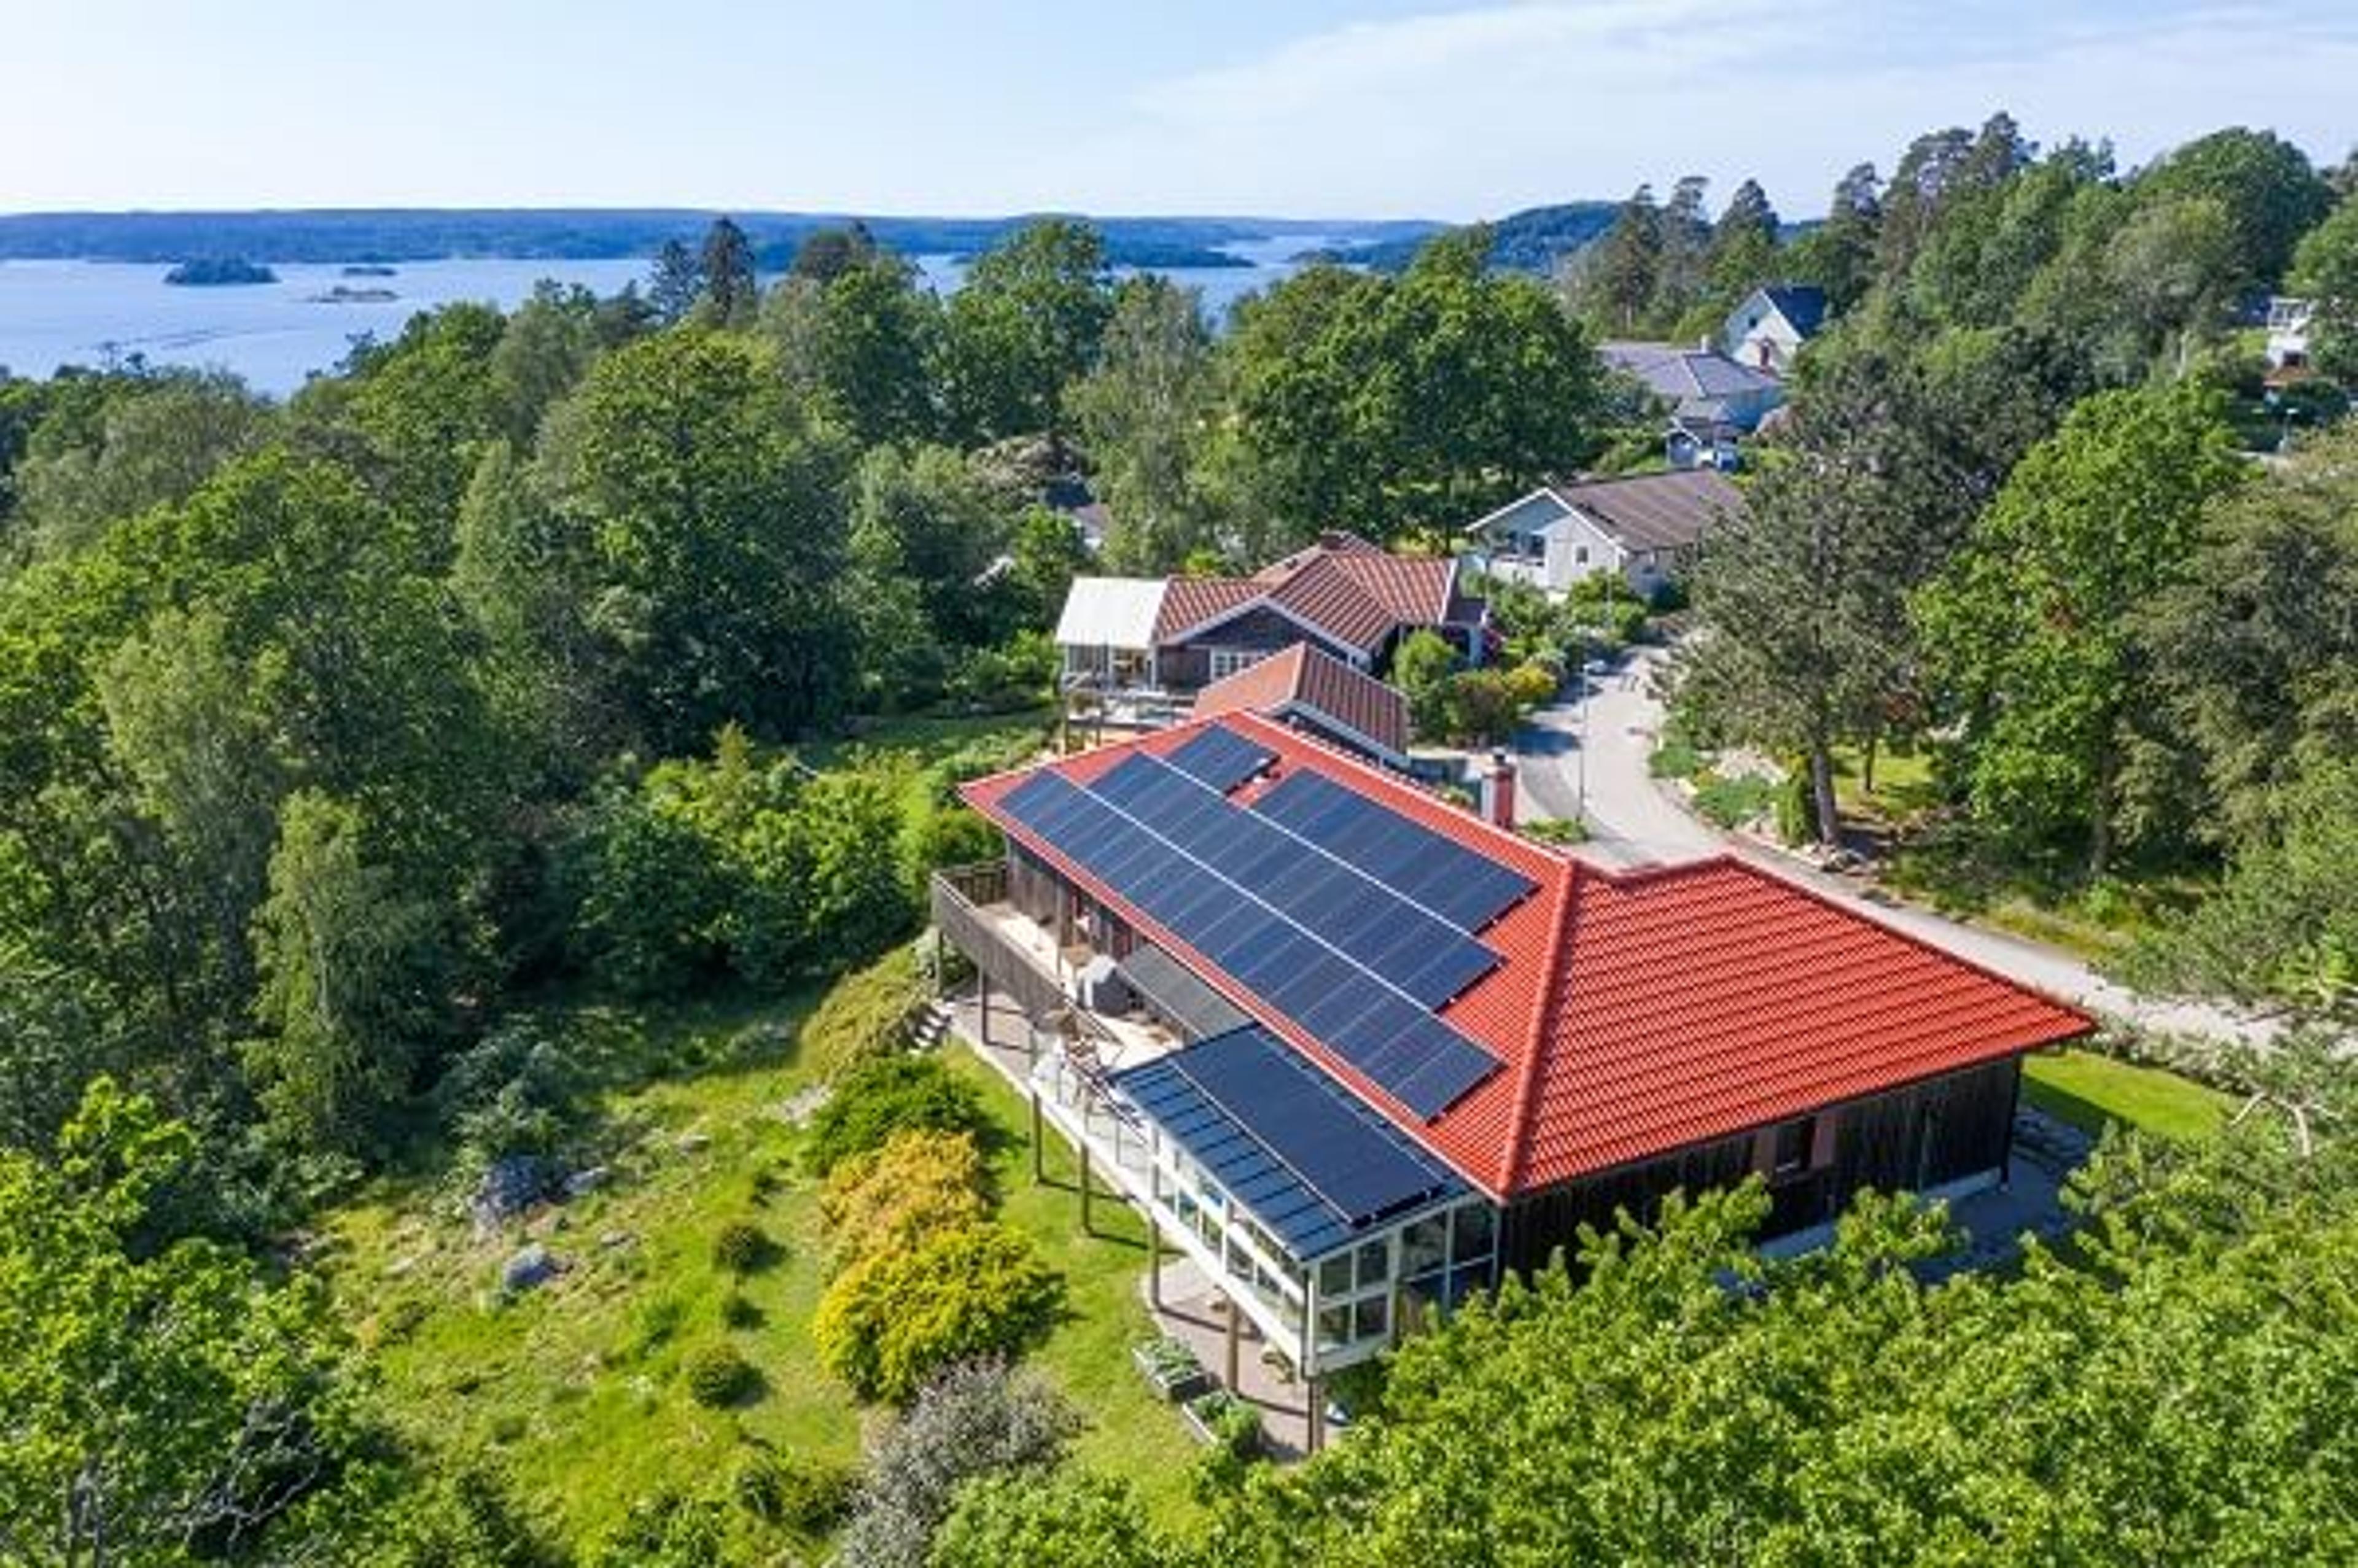 hus på kulle med solpaneler på taket